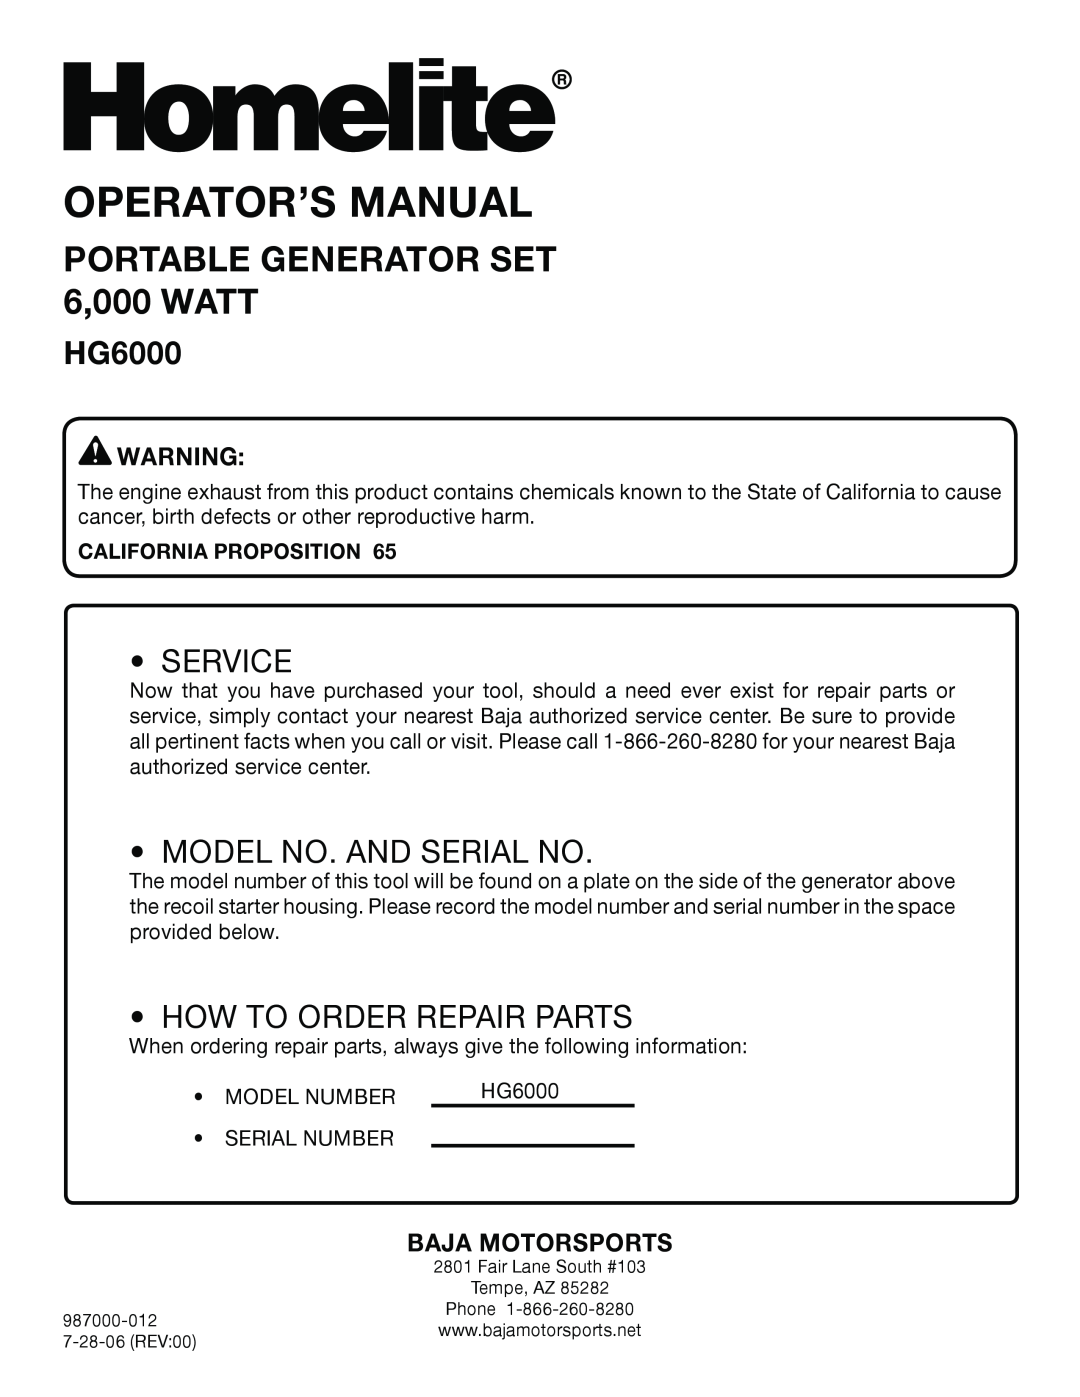 Homelite HG6000 Operator’S Manual, PORTABLE GENERATOR SET 6,000 WATT, Service, Model No. And Serial No, Baja Motorsports 